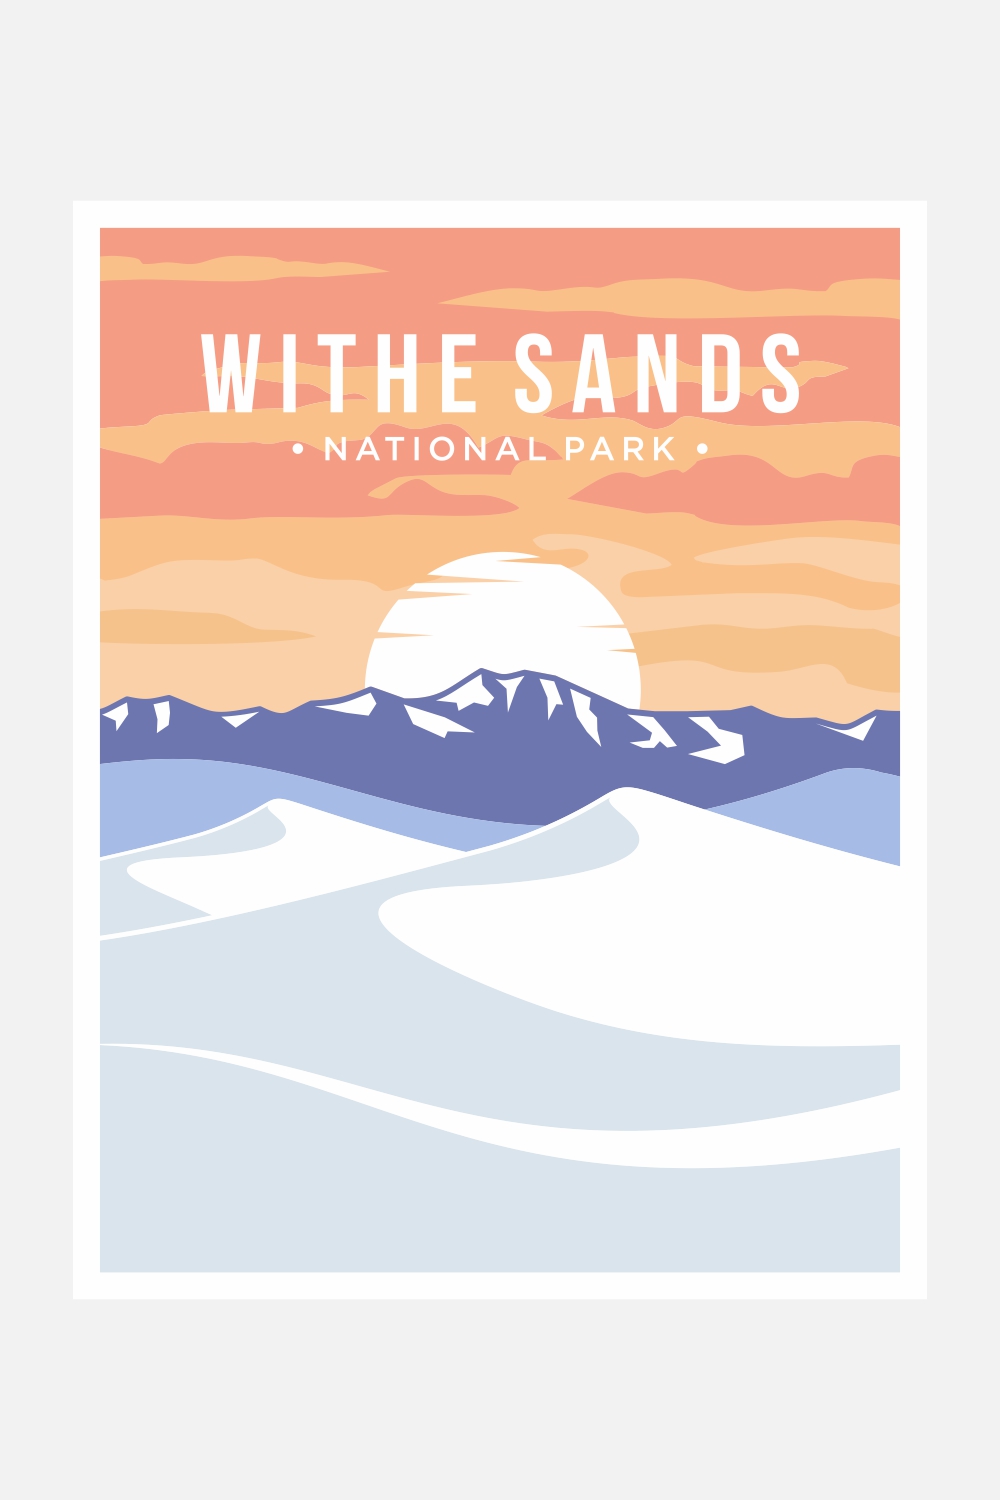 White Sand National Park poster vector illustration design – Only $8 pinterest preview image.